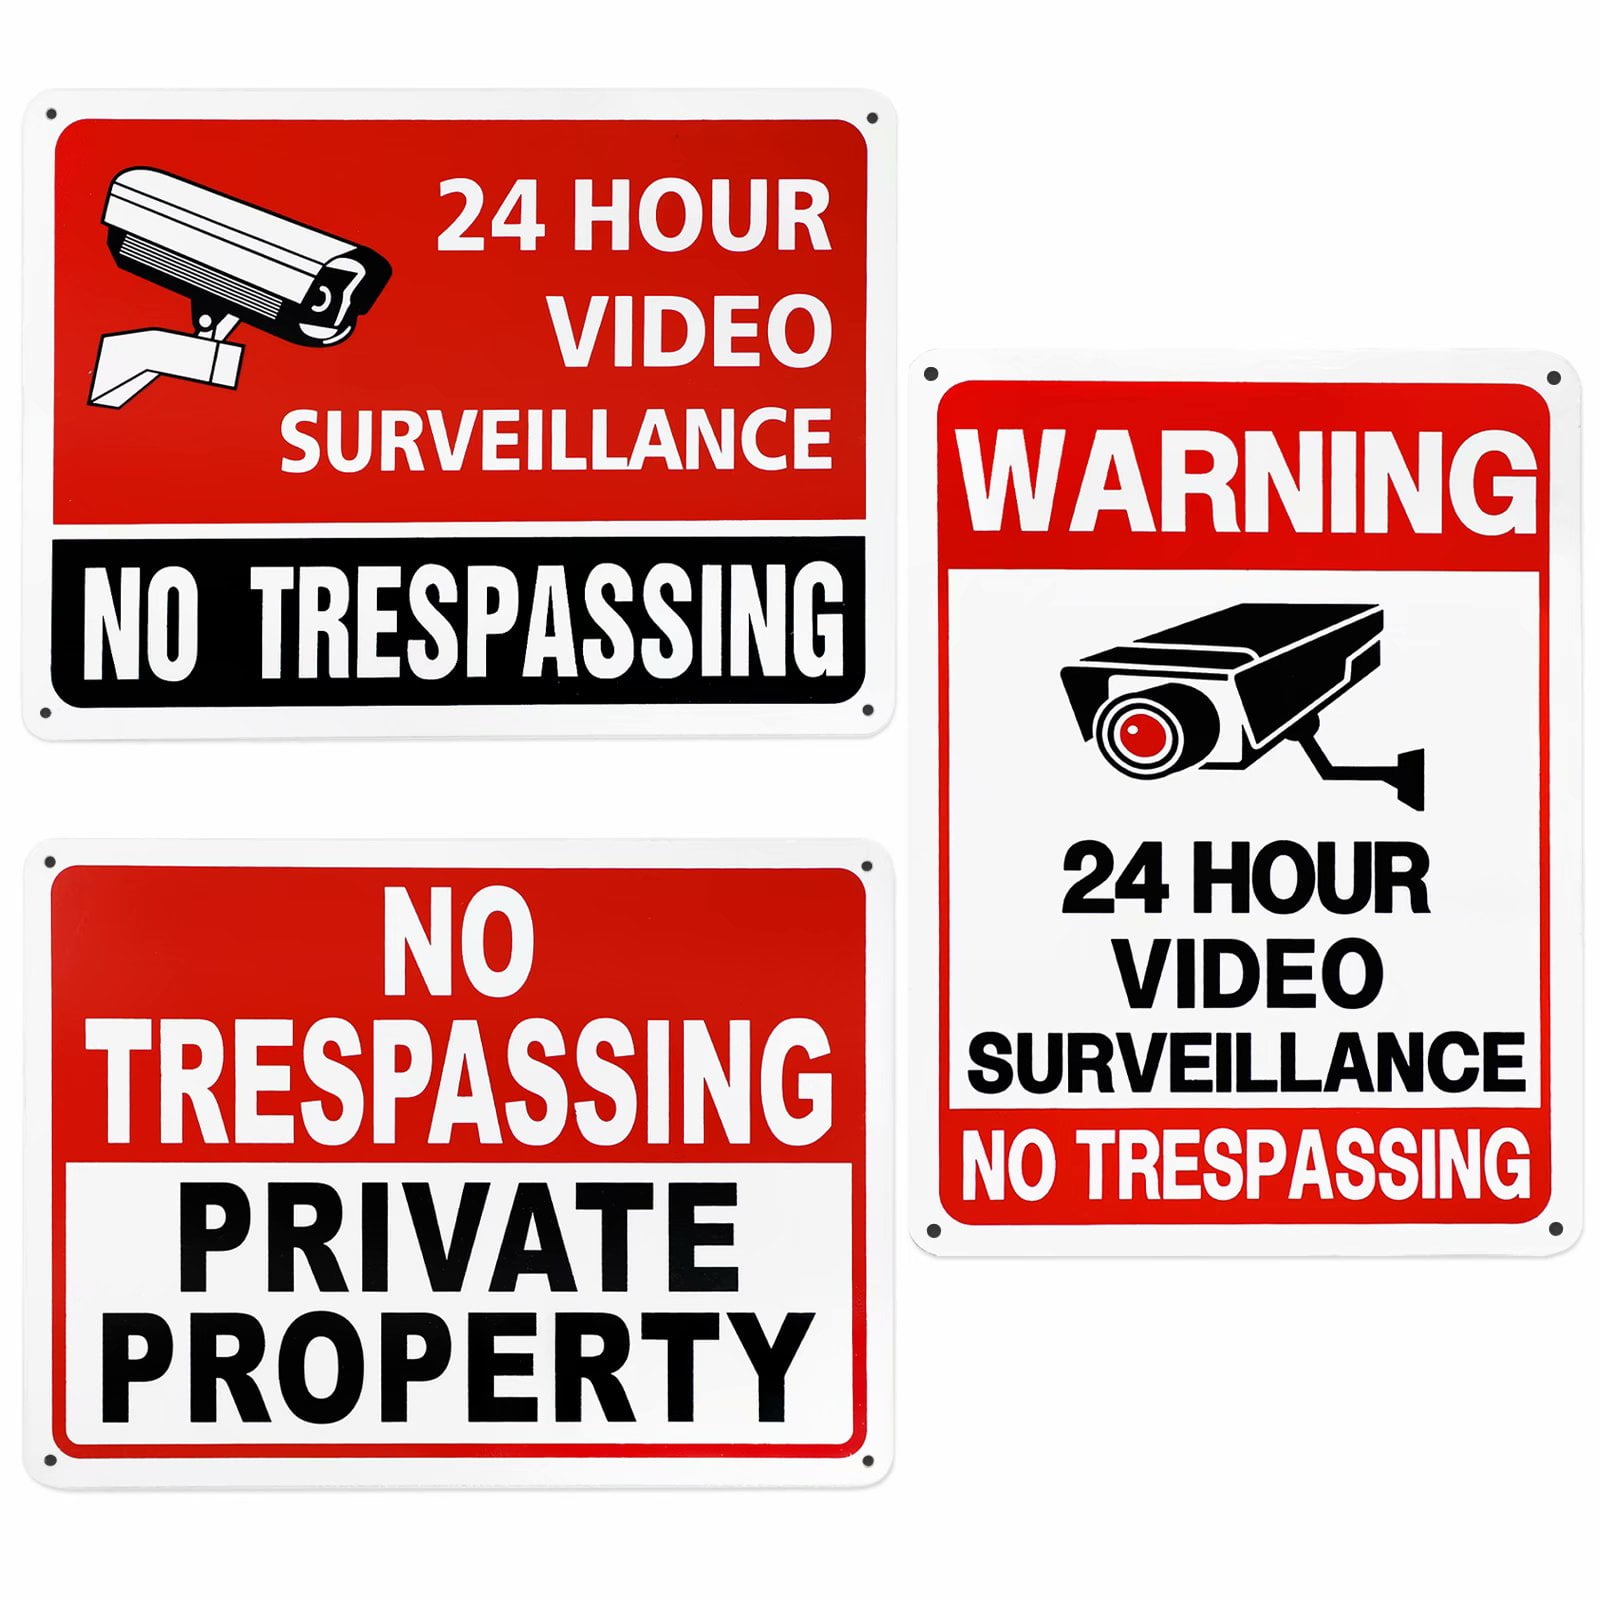 VIDEO SURVEILLANCE CCTV Security Decal  8.5x11 Sticker set of 2 pcs 24hr 